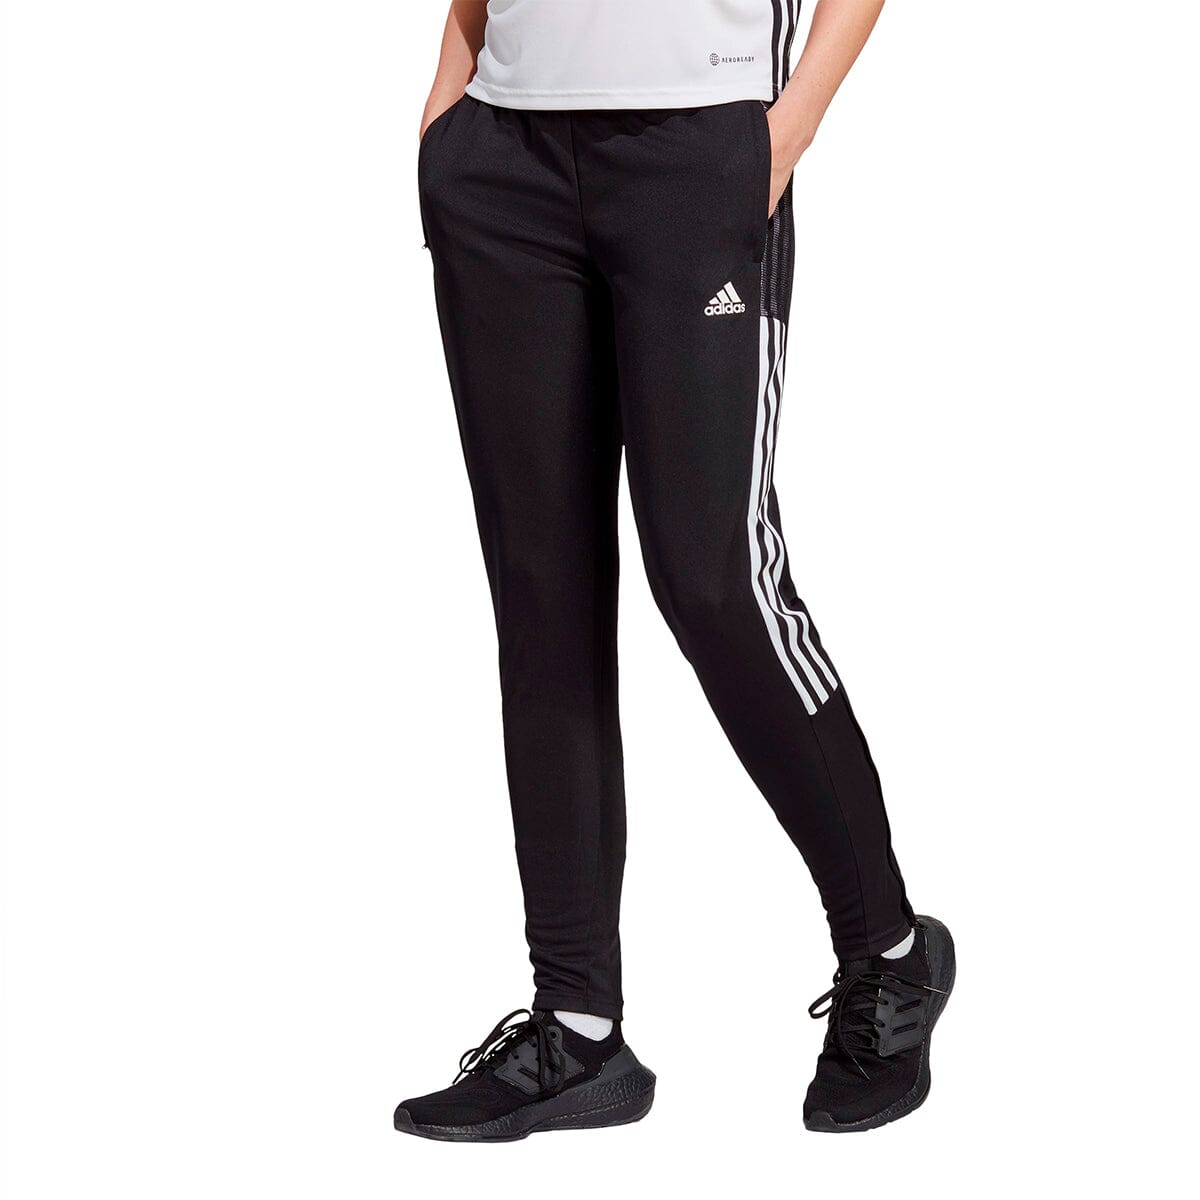 Adidas Soccer Pants/Jacket Sale